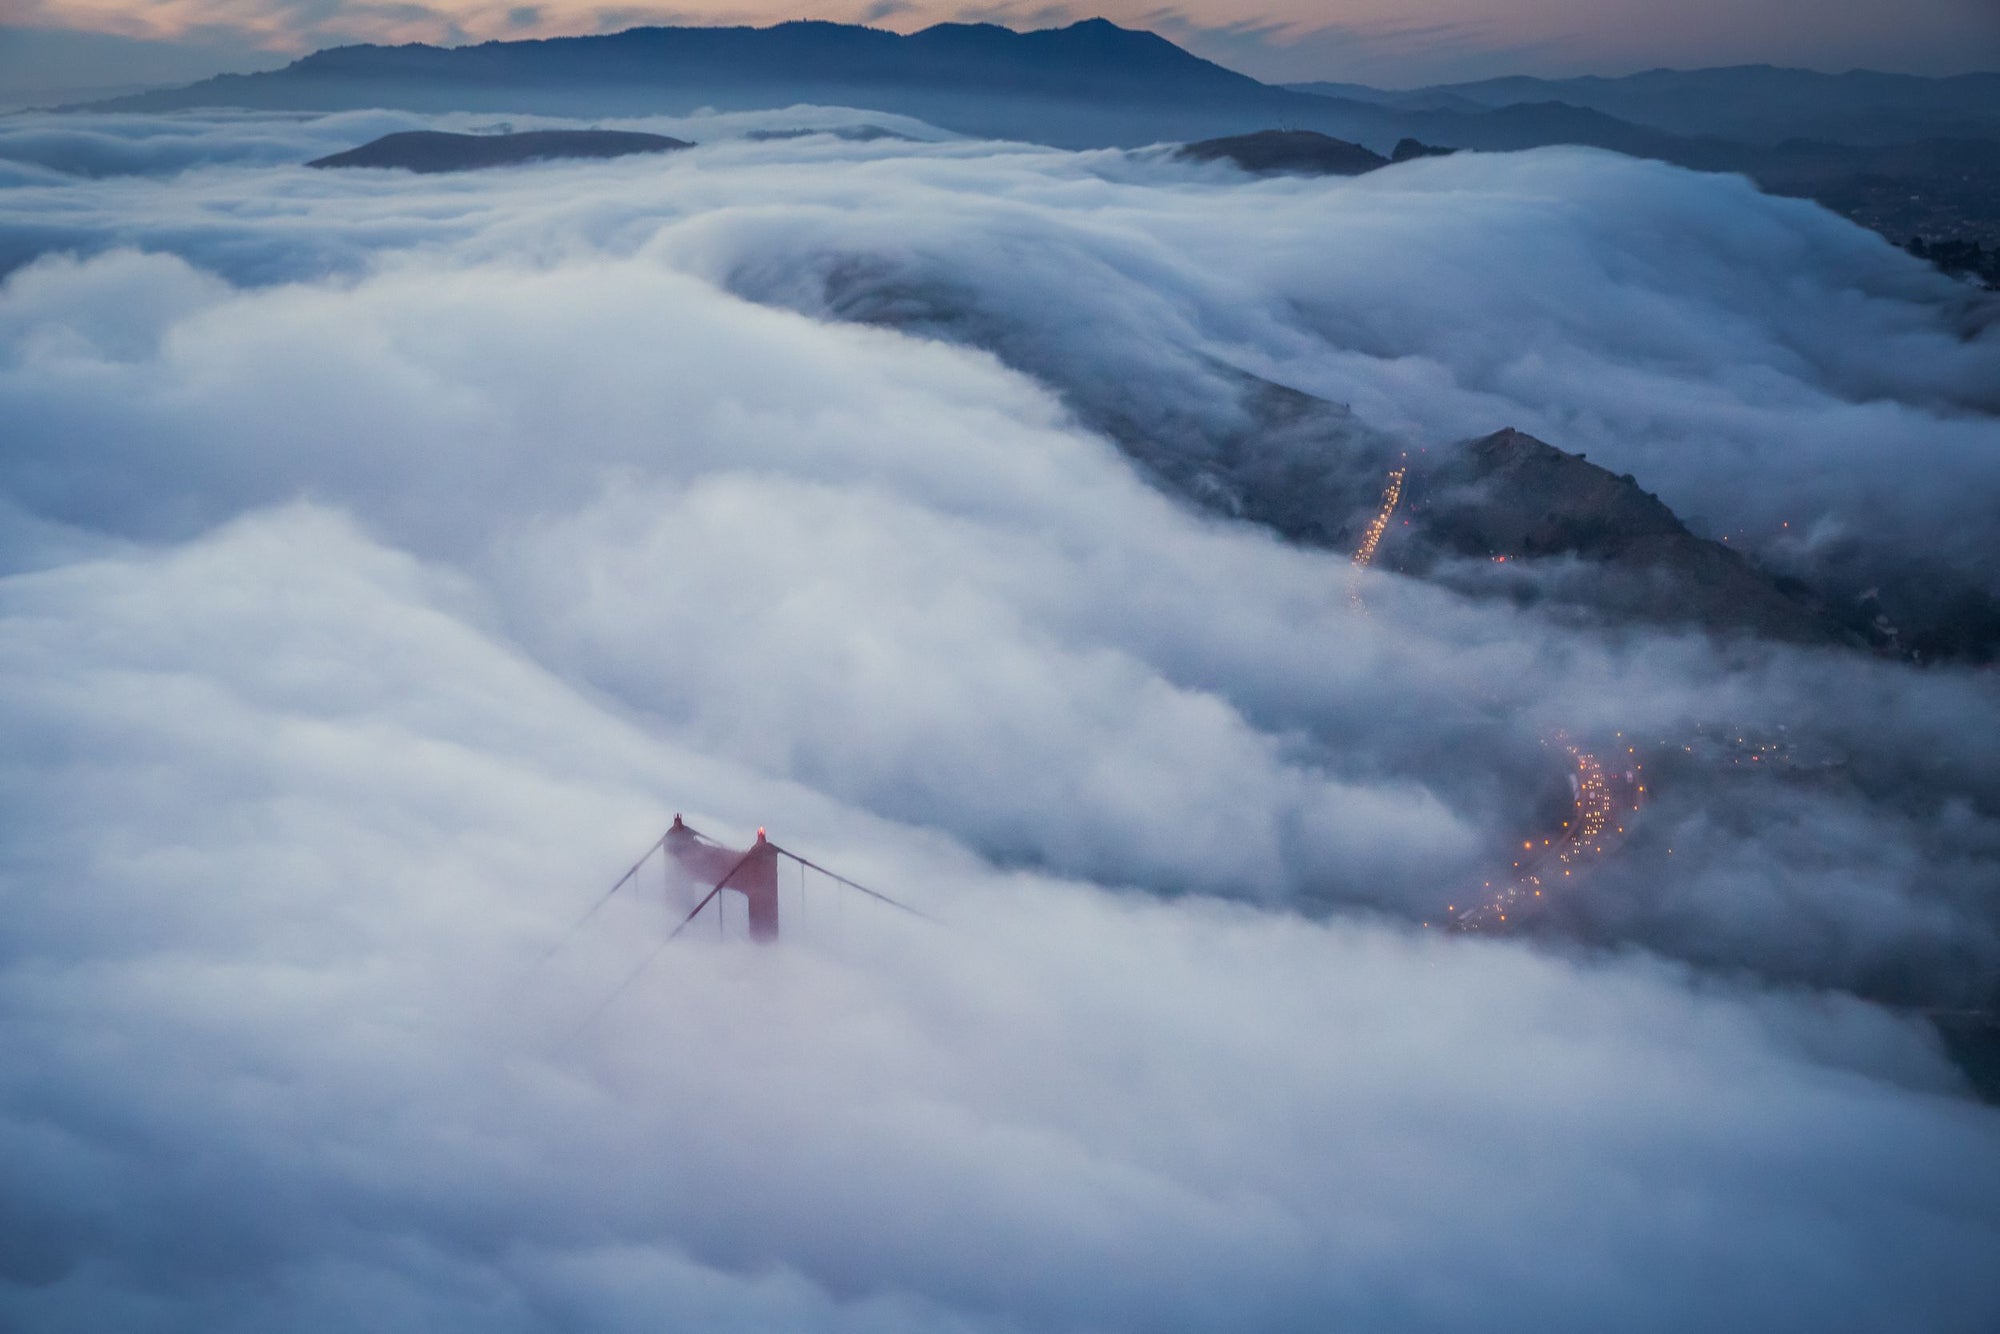 Fog blankets the Golden Gate Bridge as traffic winds down the road below.